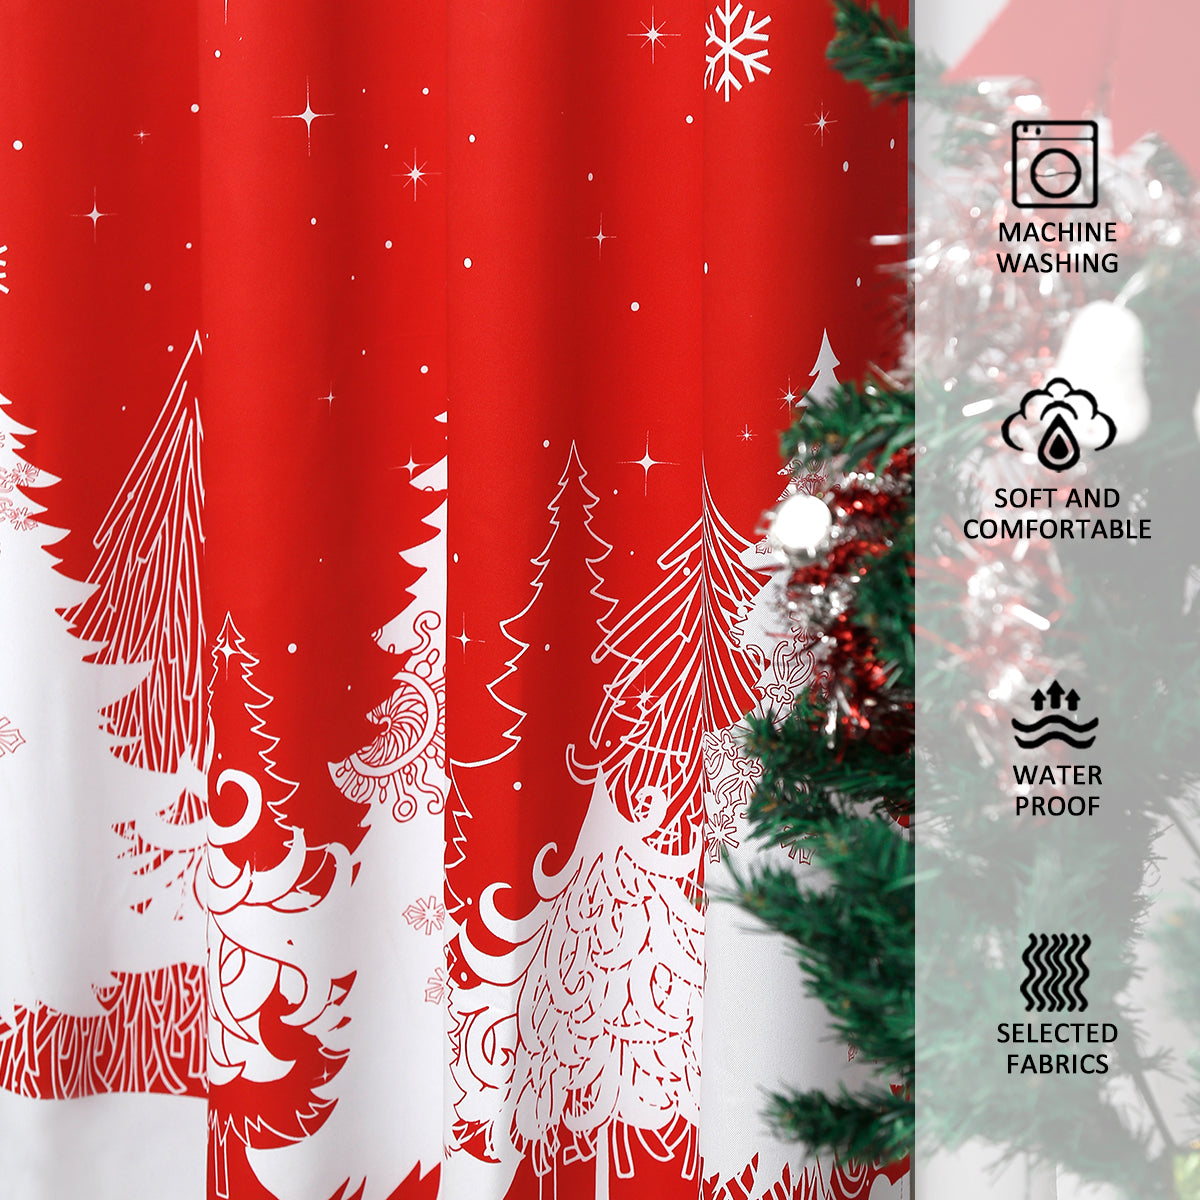 Christmas Curtains - Red Xmas Trees